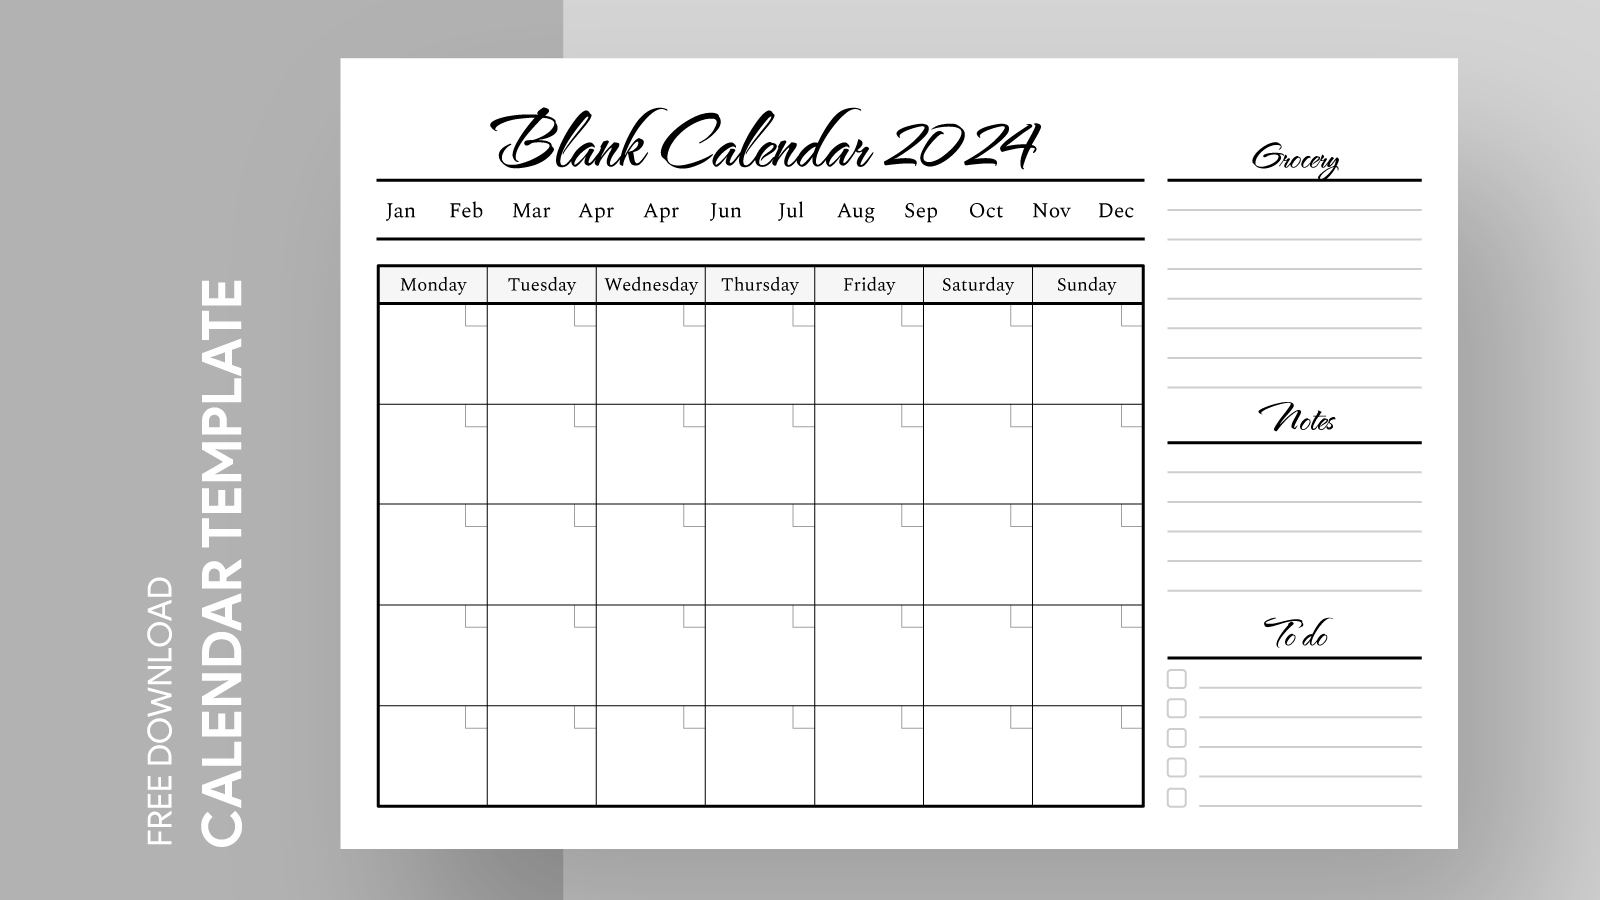 Blank Calendar Template 2024 Free Google Docs Template gdoc.io